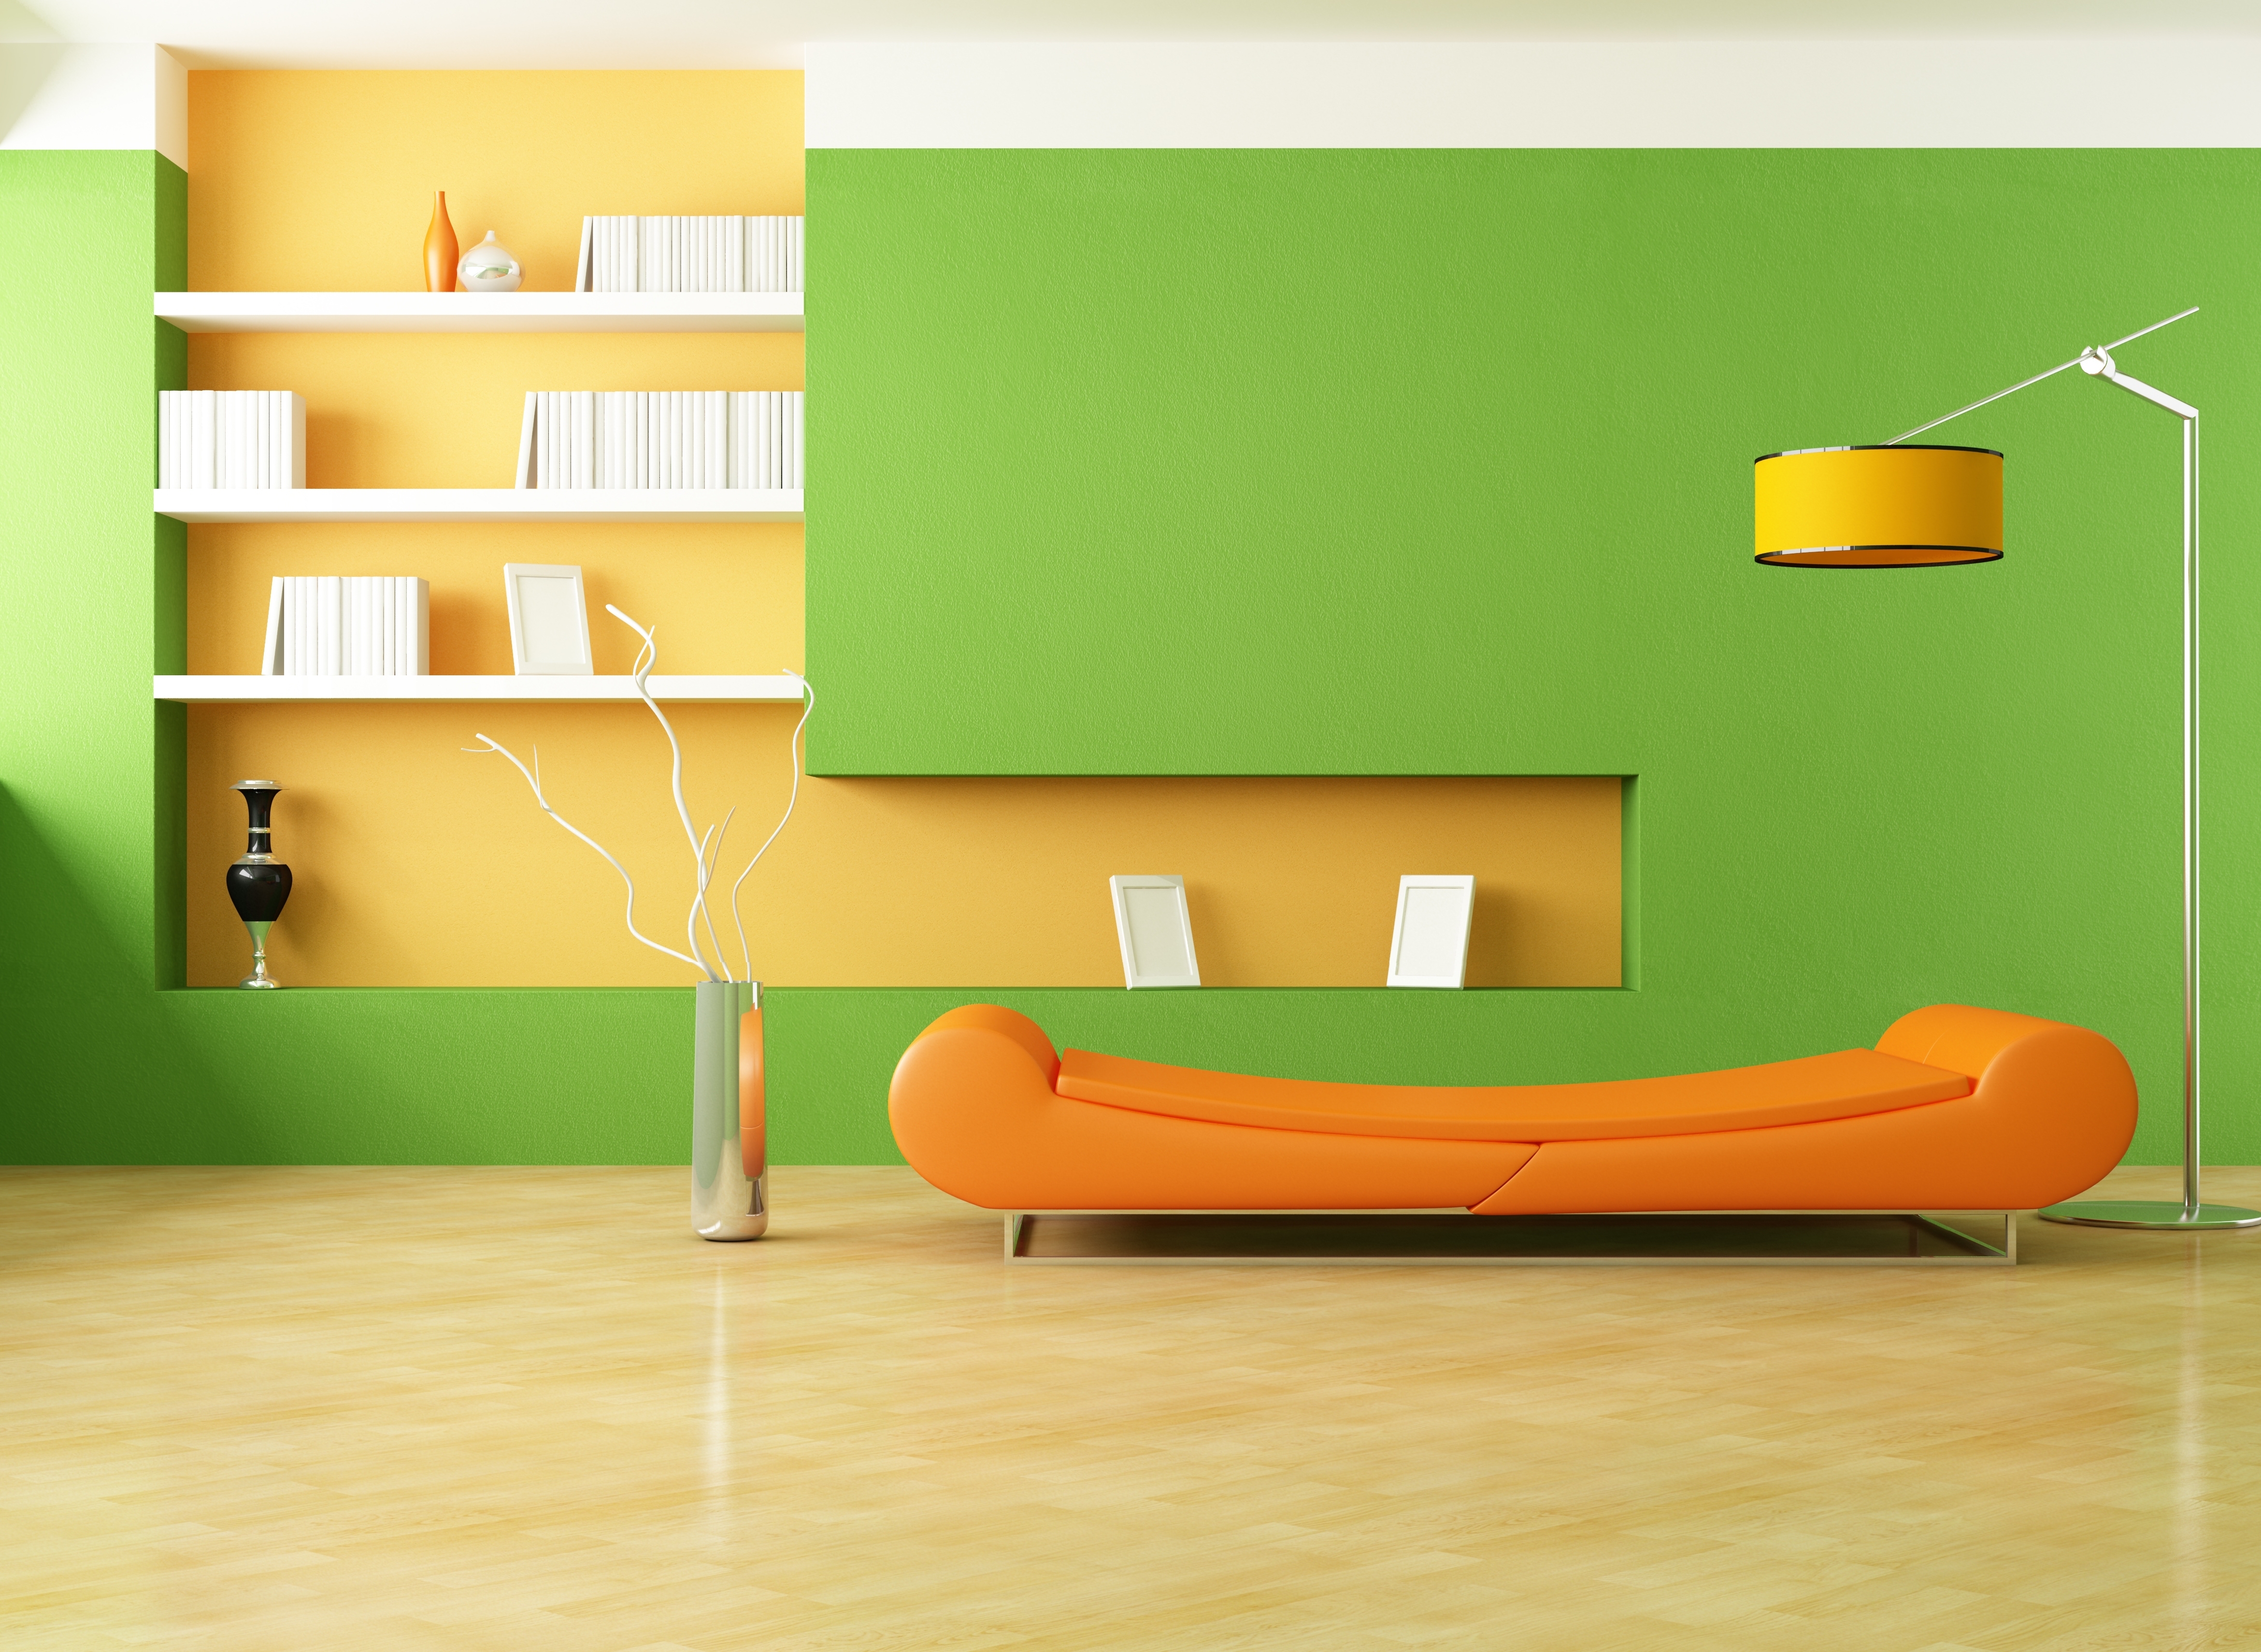 design, minimalism, interior, orange, miscellanea, miscellaneous, lamp, room, style, sofa, vases